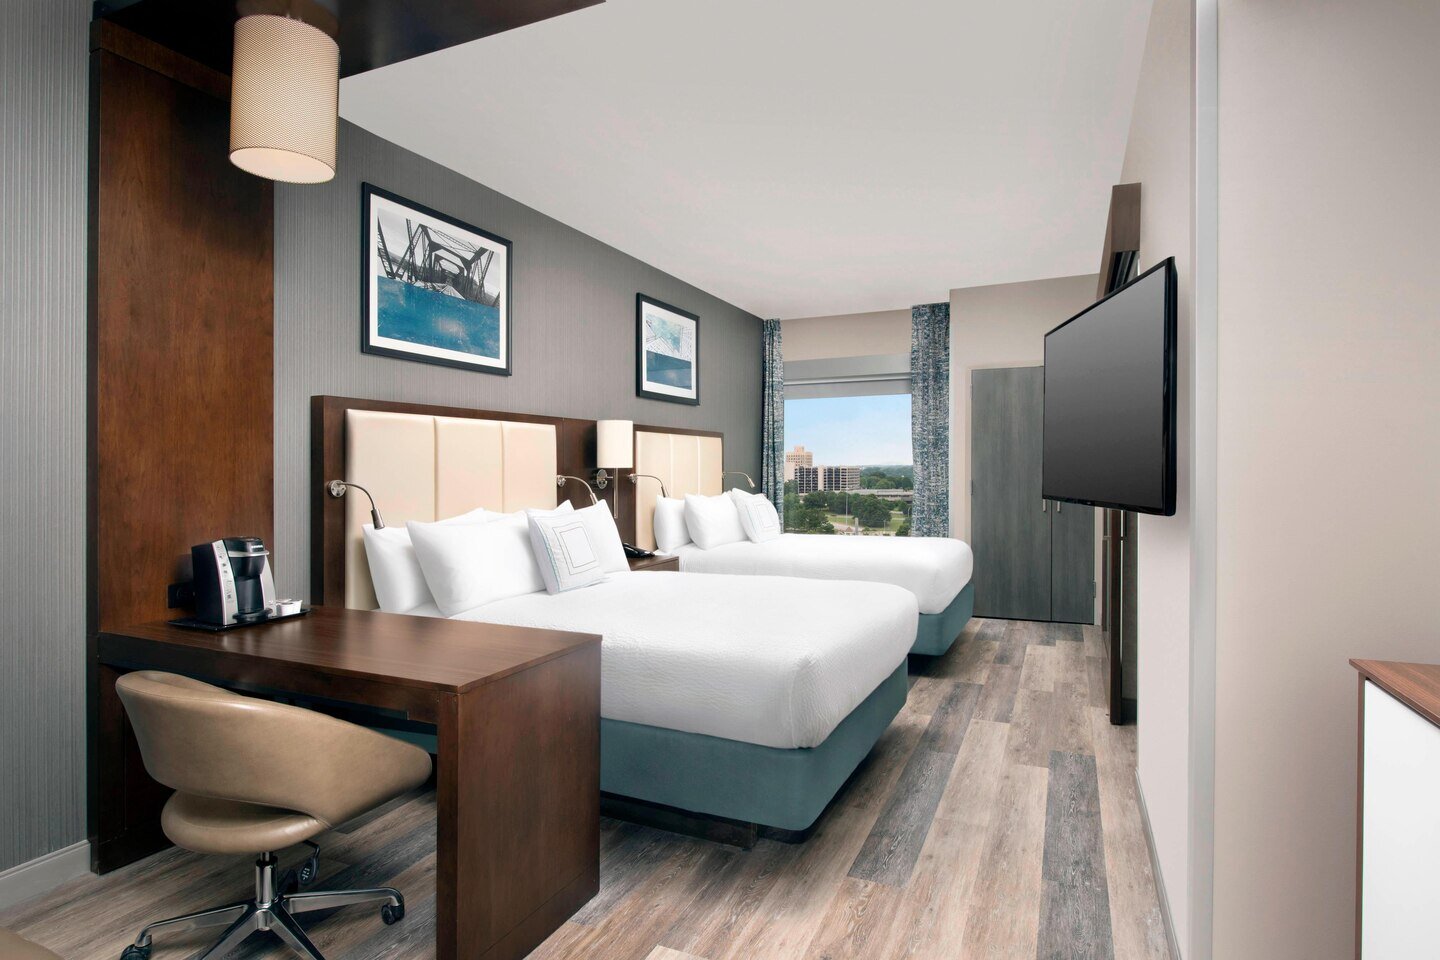 Springhill Suites Atlanta Guestroom beds and Windows.jpg